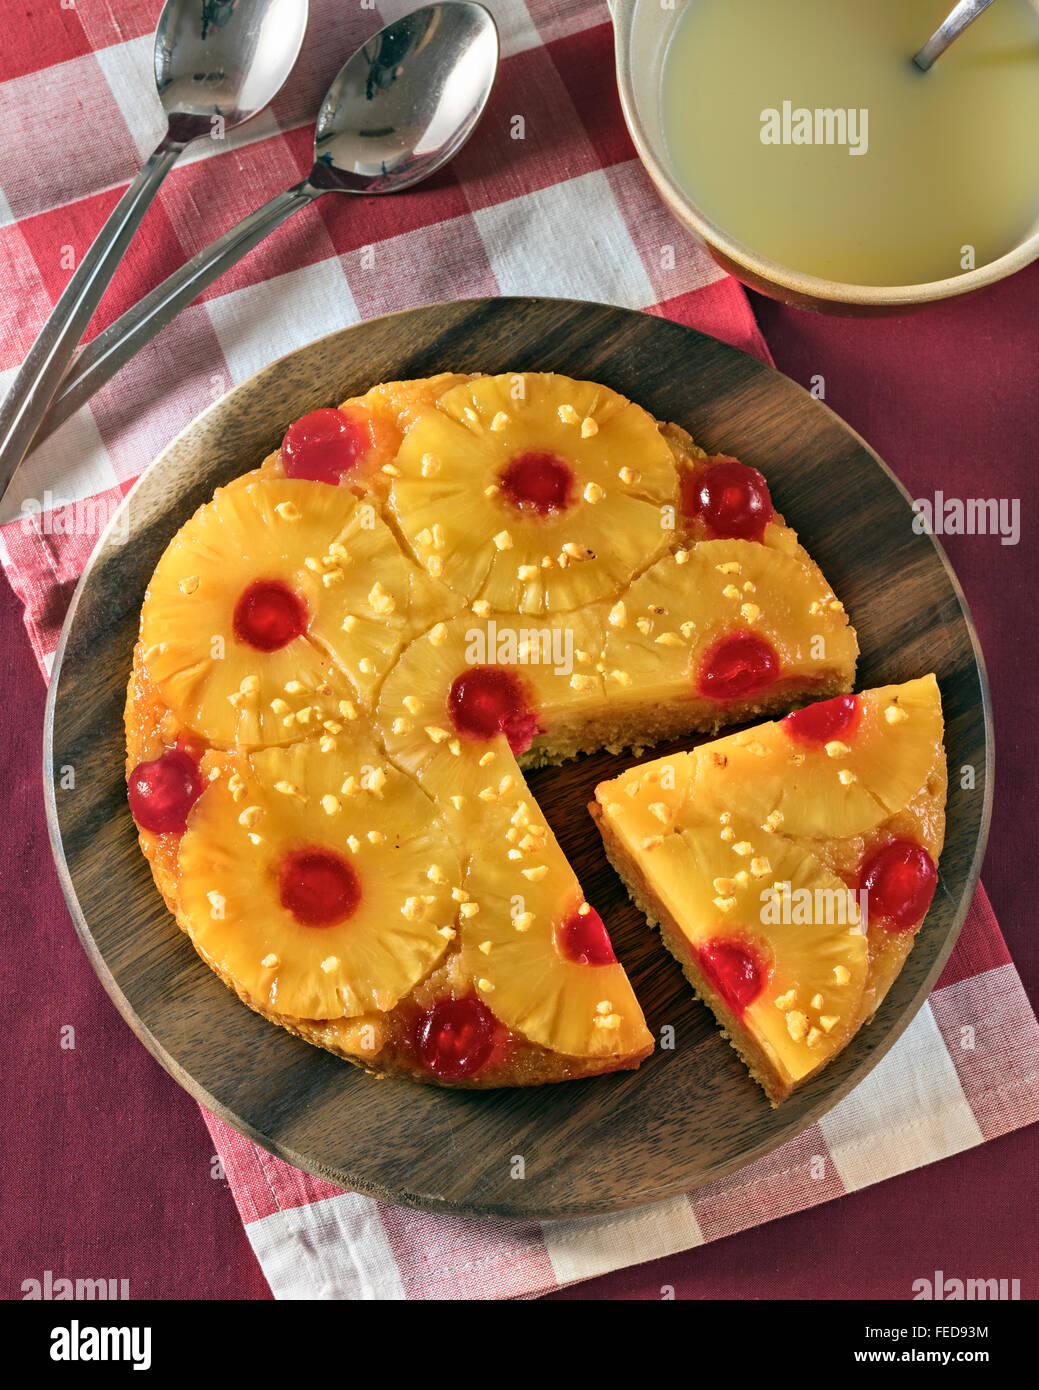 Pineapple upside down cake Stock Photo